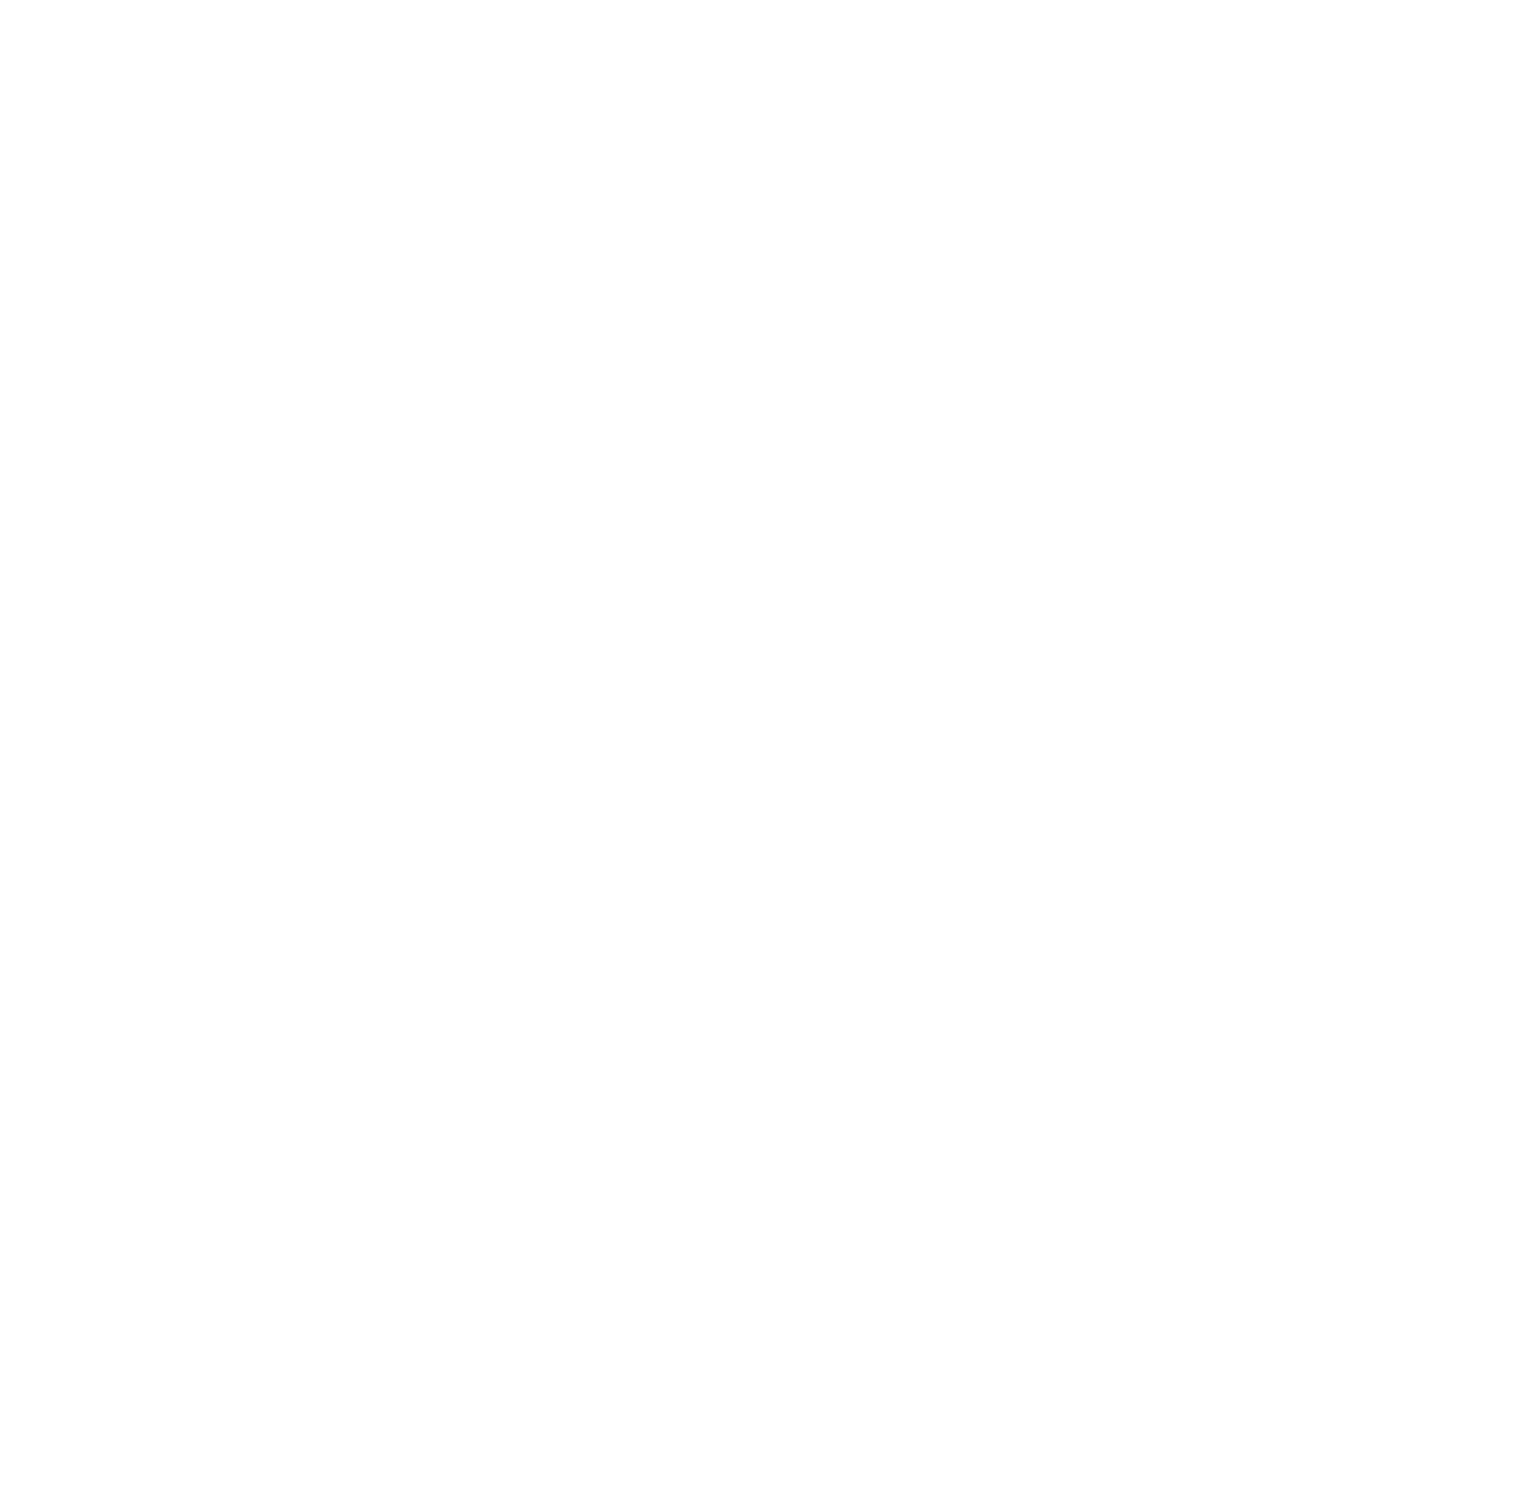 ChipMOS Technologies logo for dark backgrounds (transparent PNG)